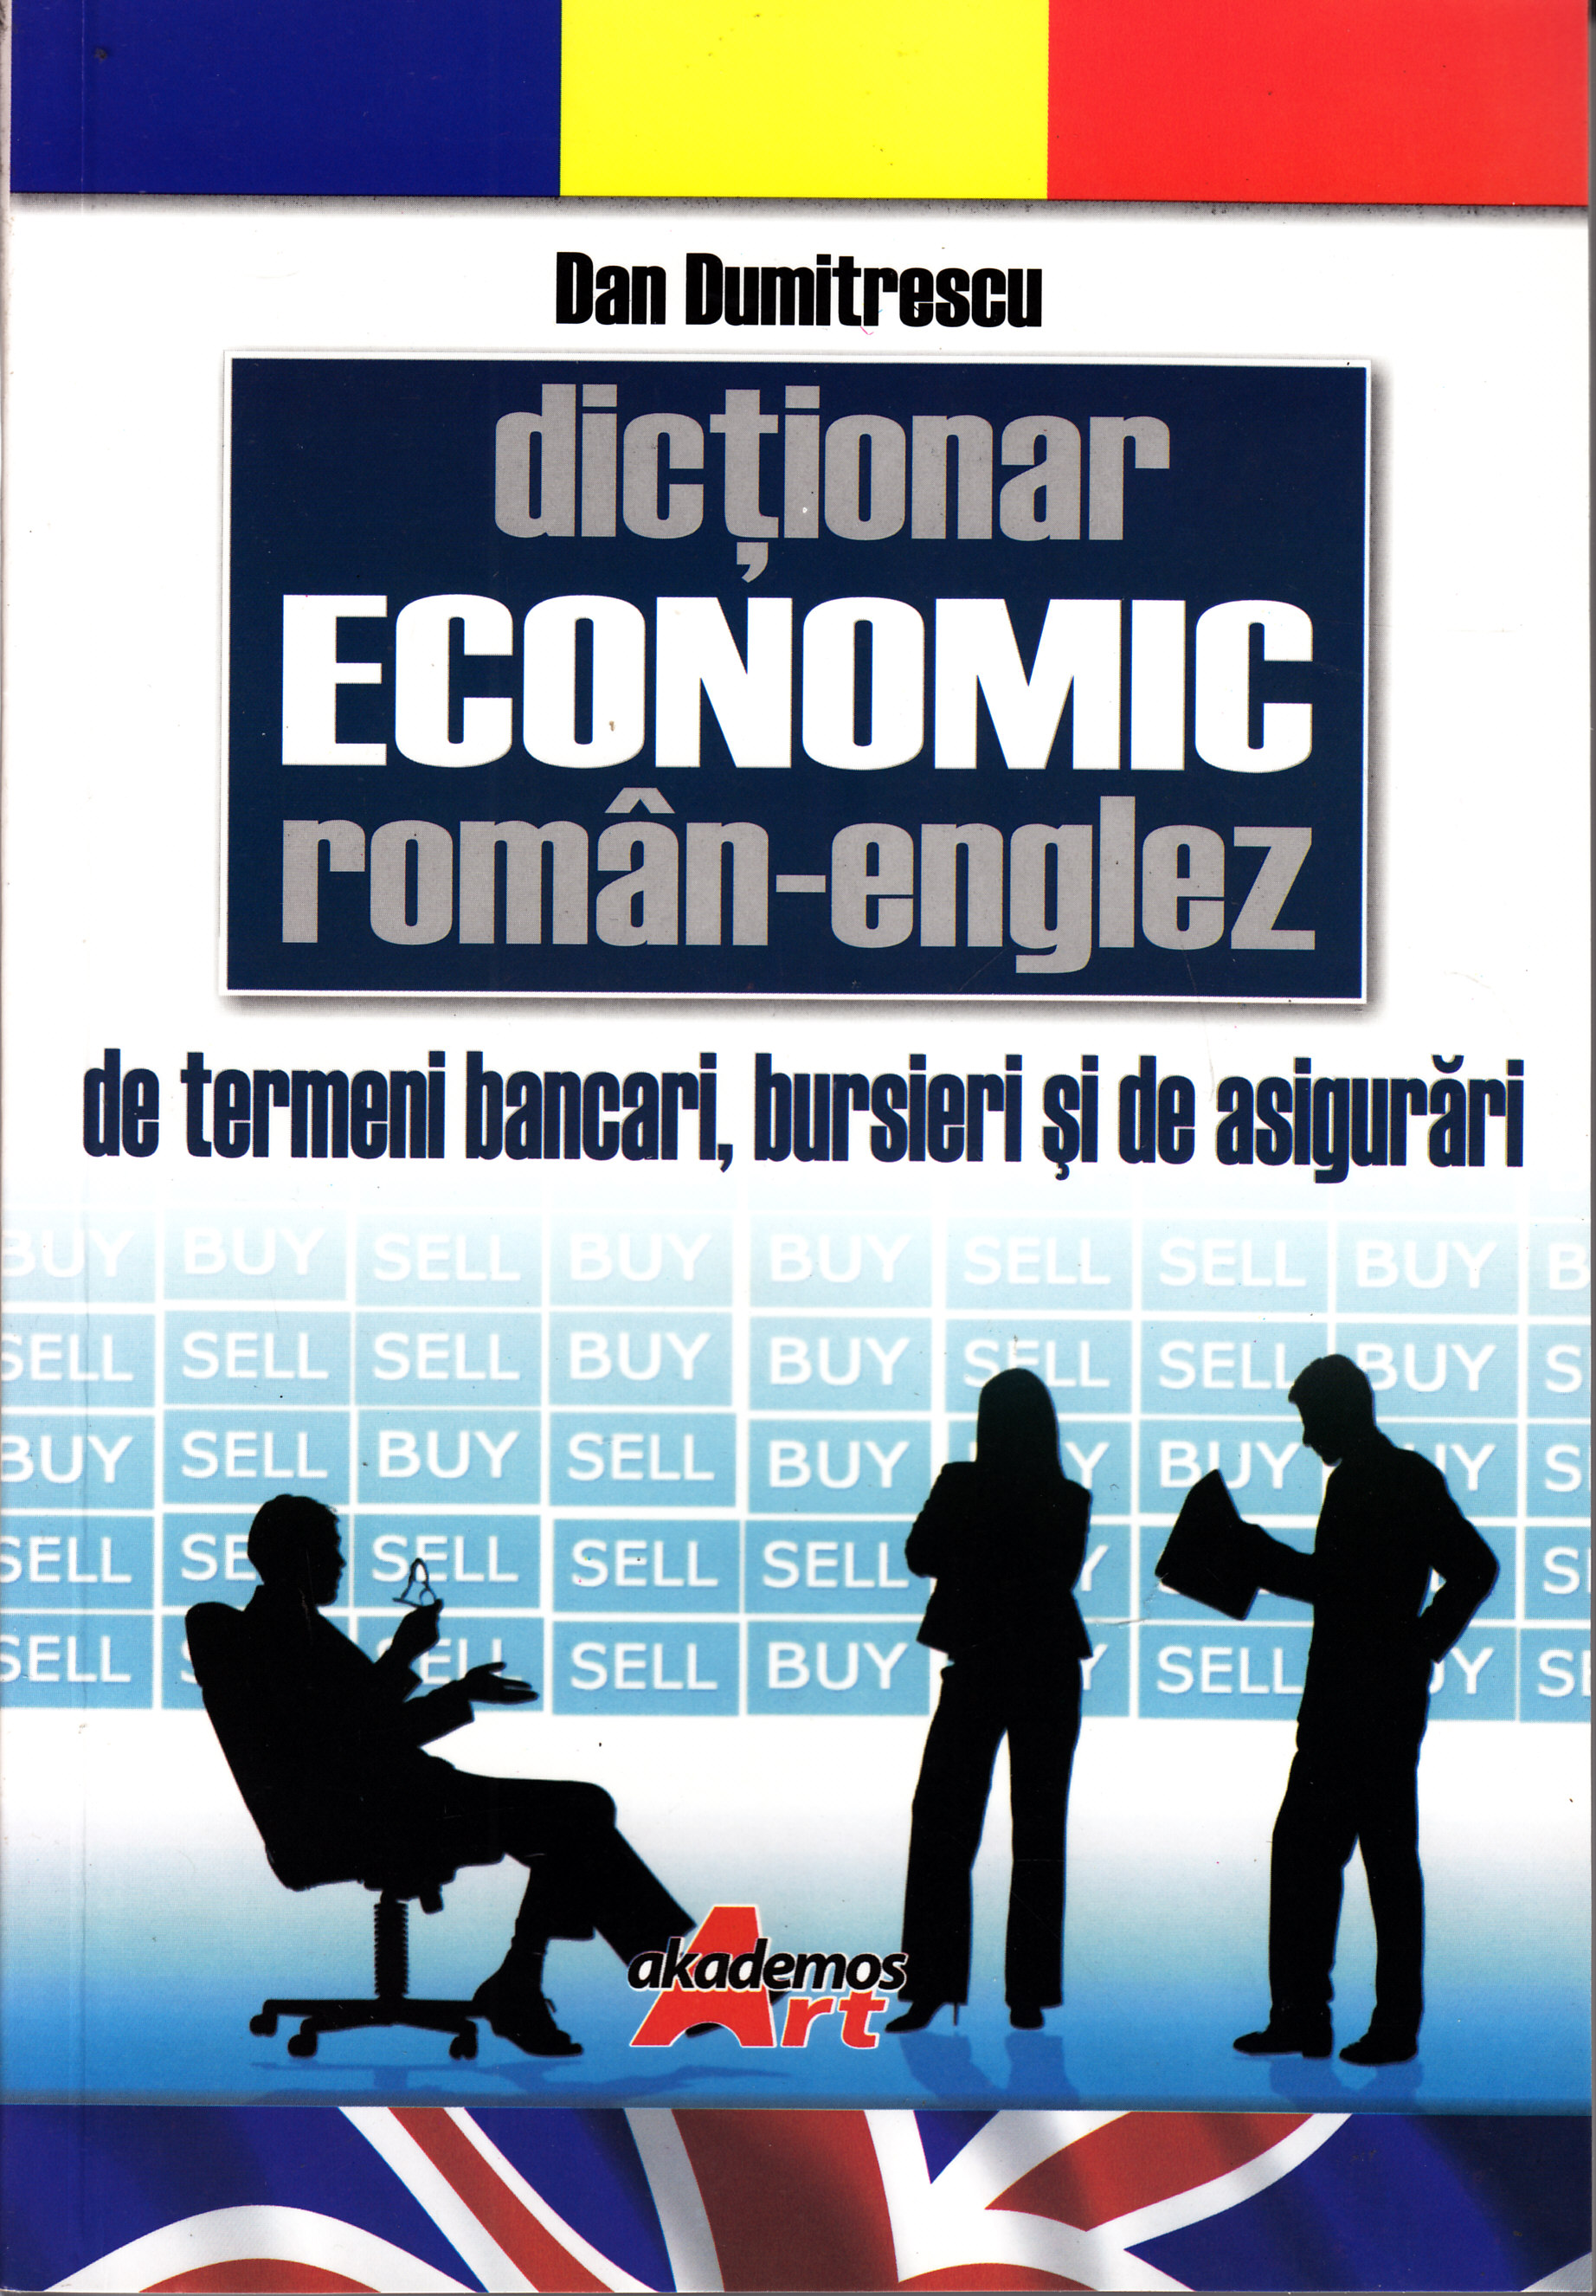 Dictionar economic roman-englez de termeni bancari, bursieri si de asigurari - Dan Dumitrescu